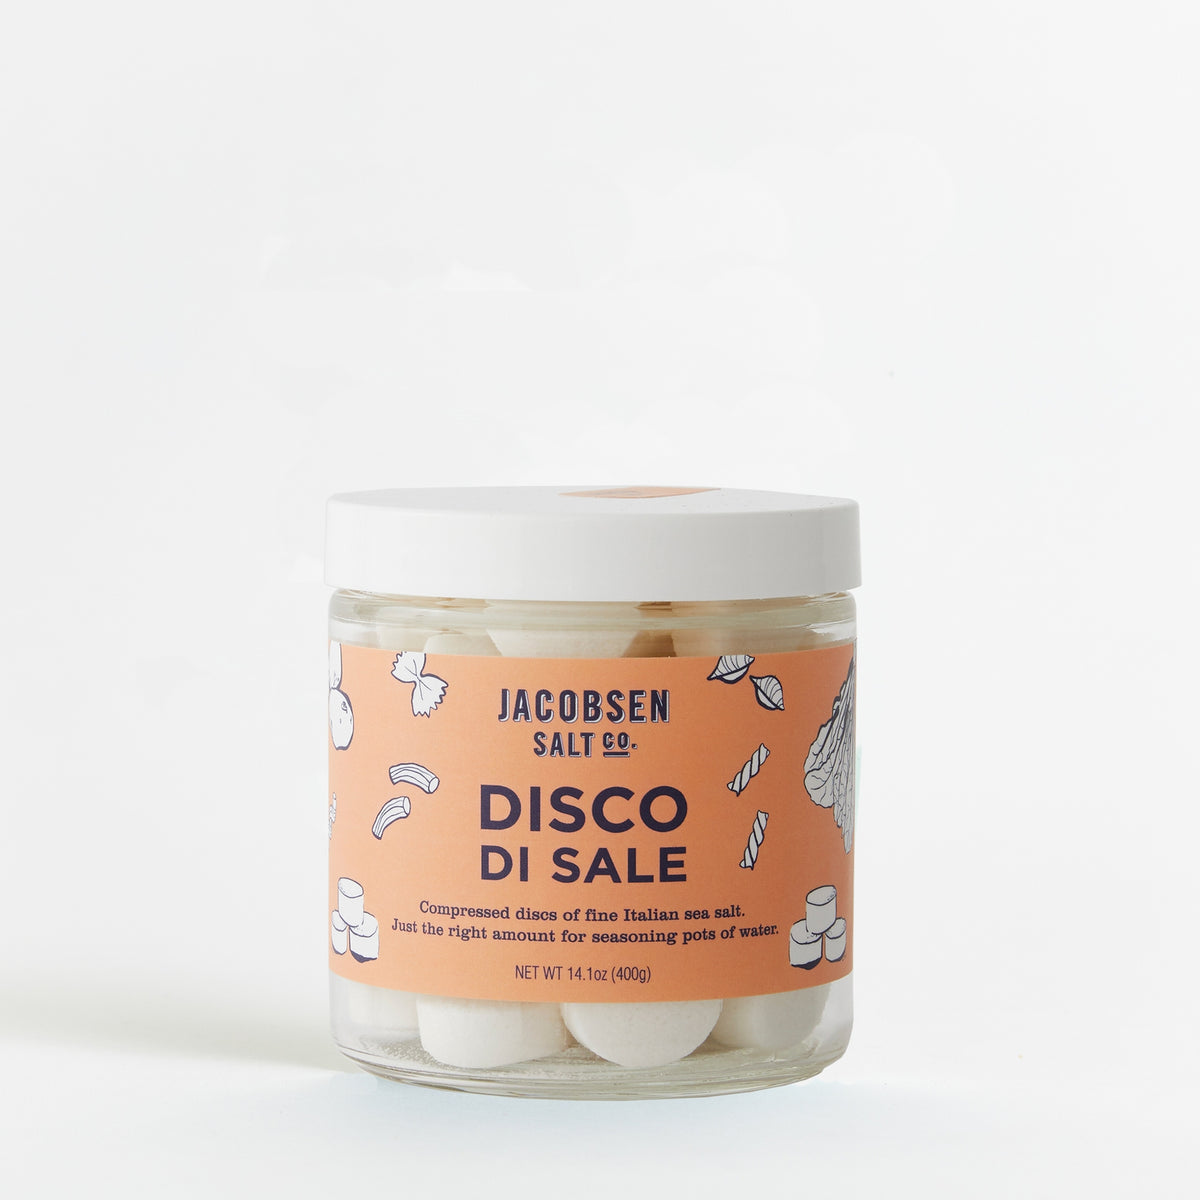 Jacobsen Salt Co. Disco di Sale / Pasta Salt